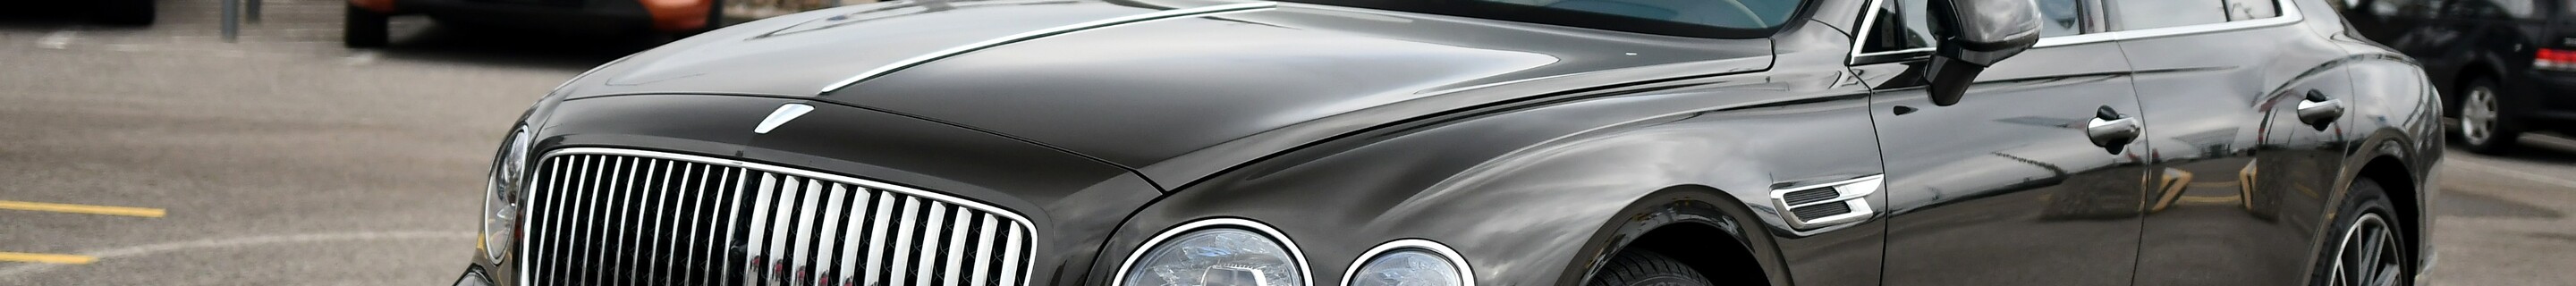 Bentley Flying Spur W12 2020